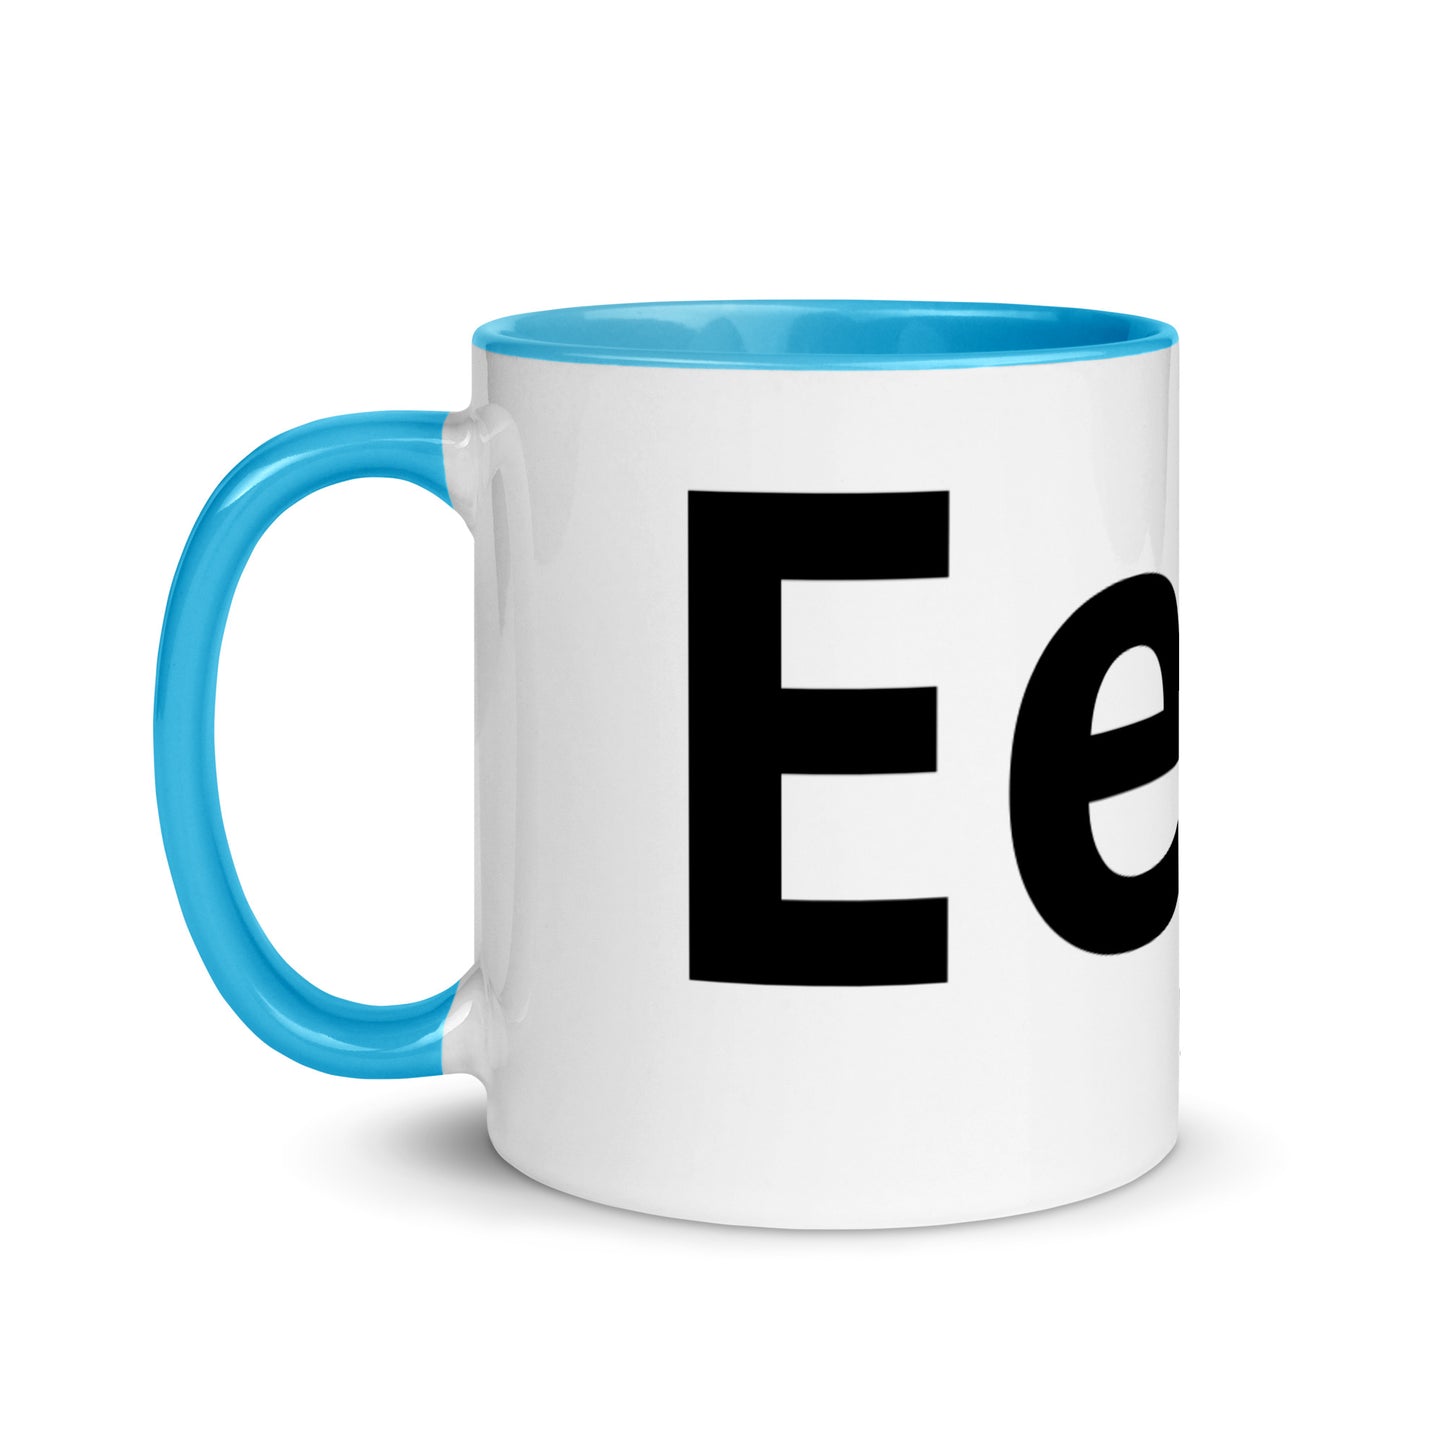 'Eejit' Enamel Mug Mug with Colour Inside